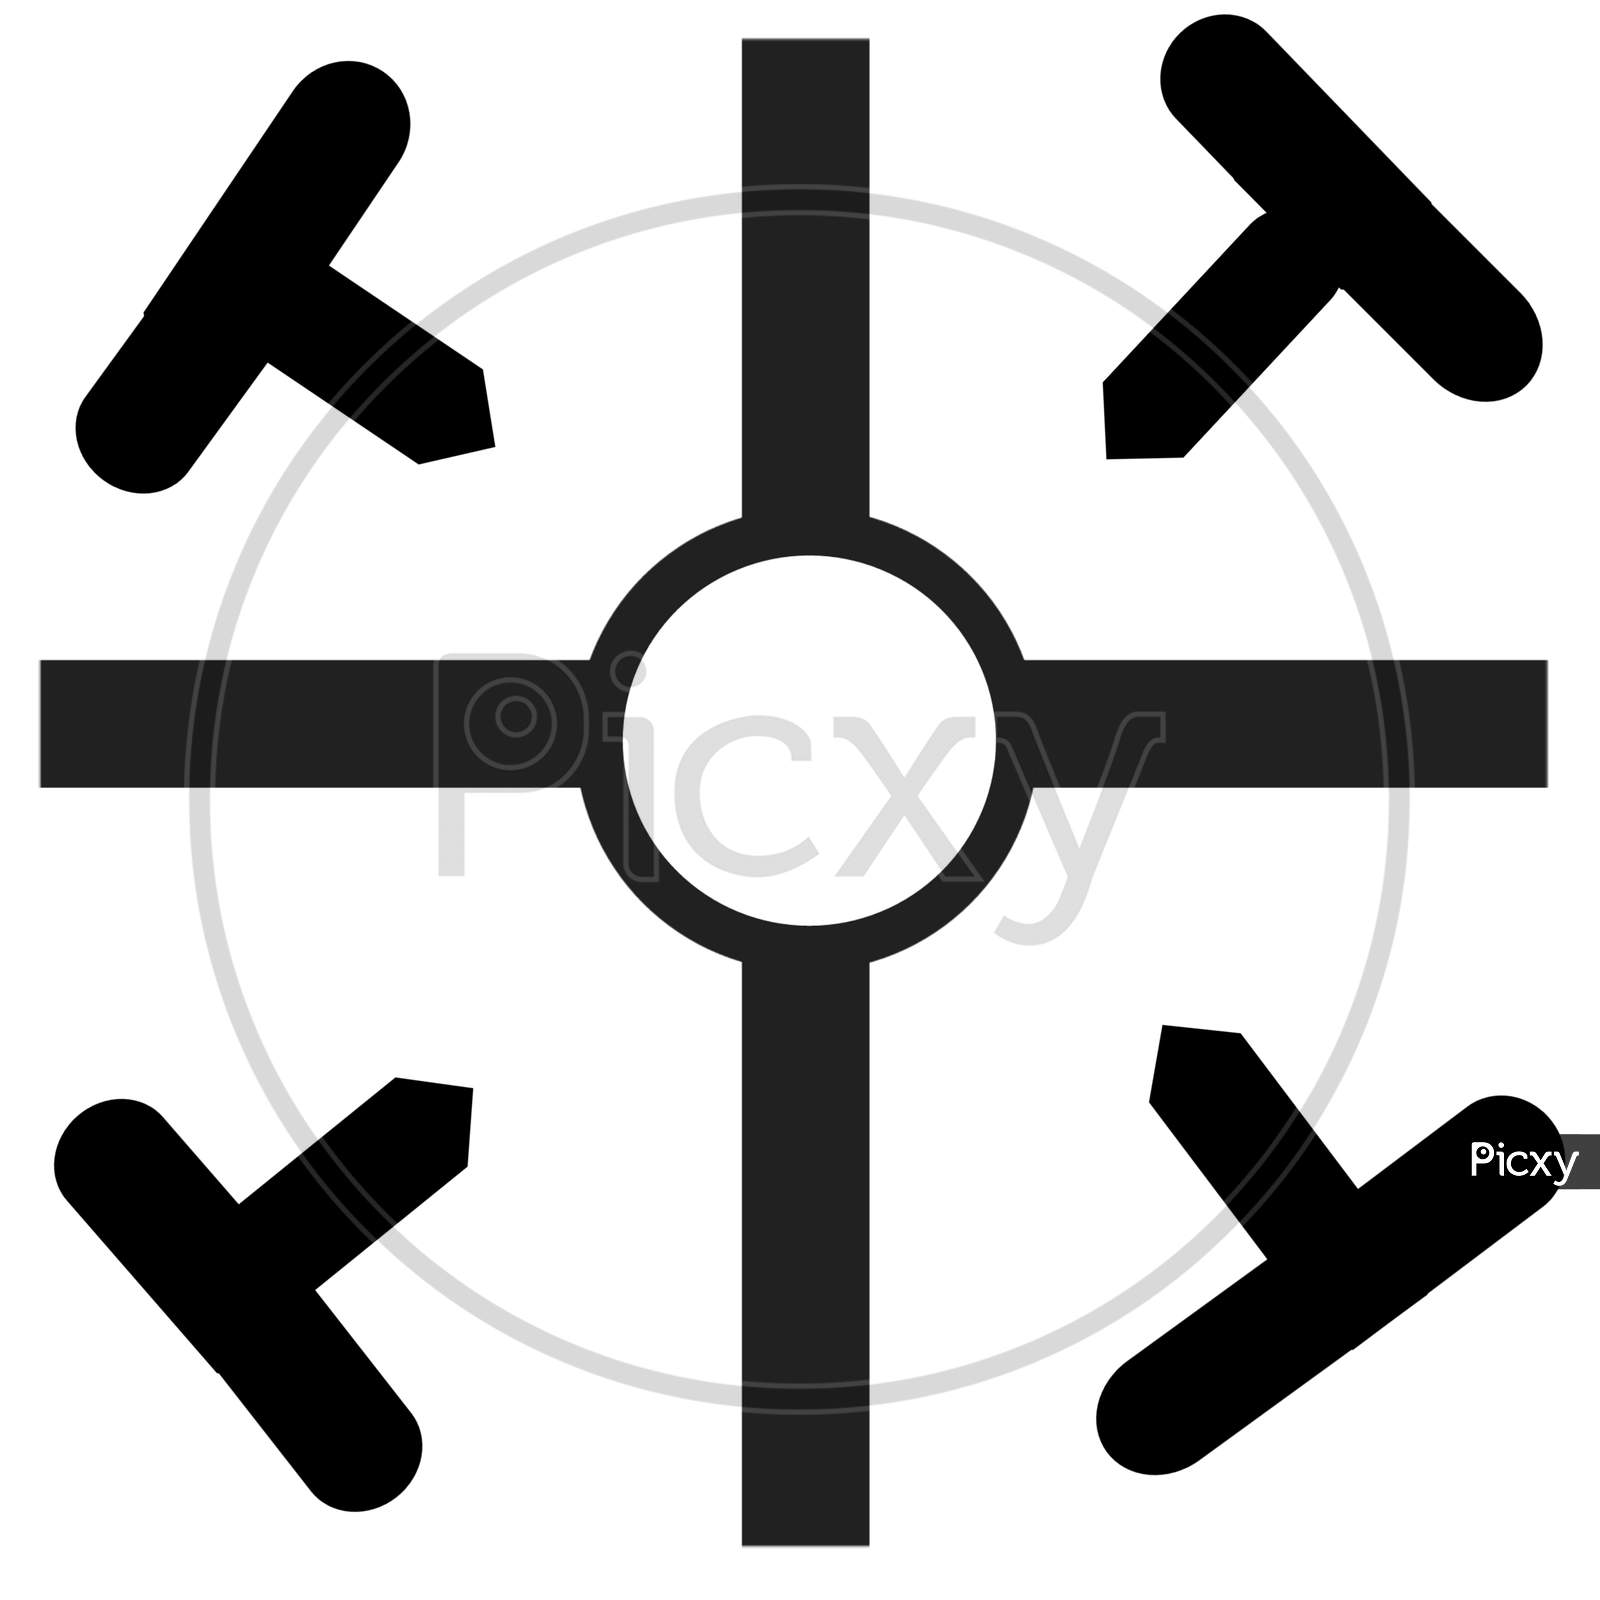 Coptic Cross Symbol With White Background.